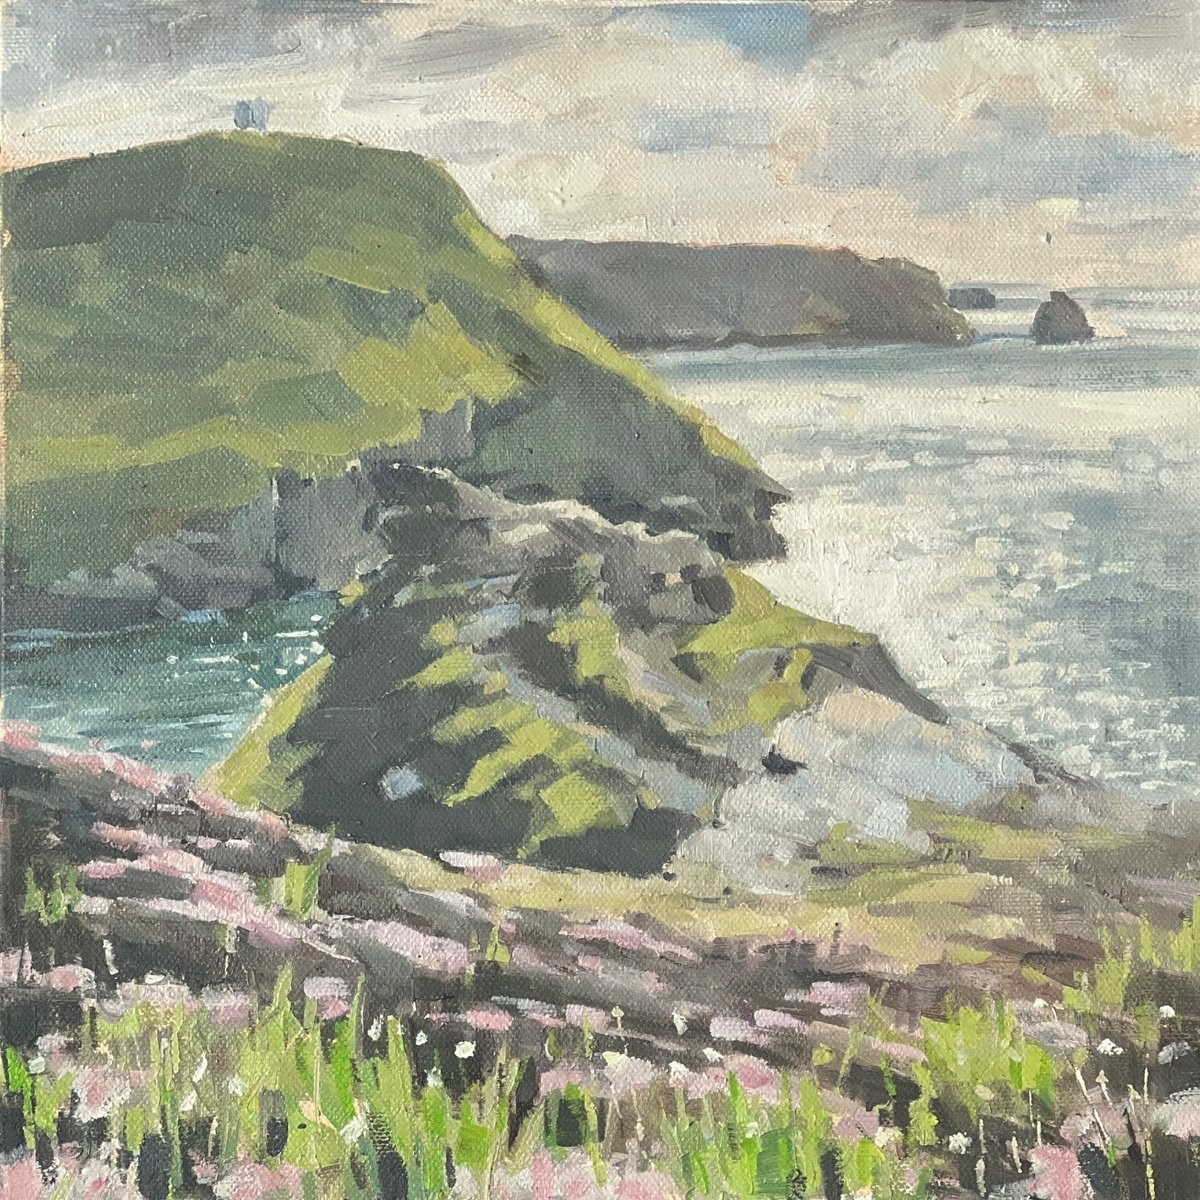 Boscastle from the cliffs by Louise Gillard